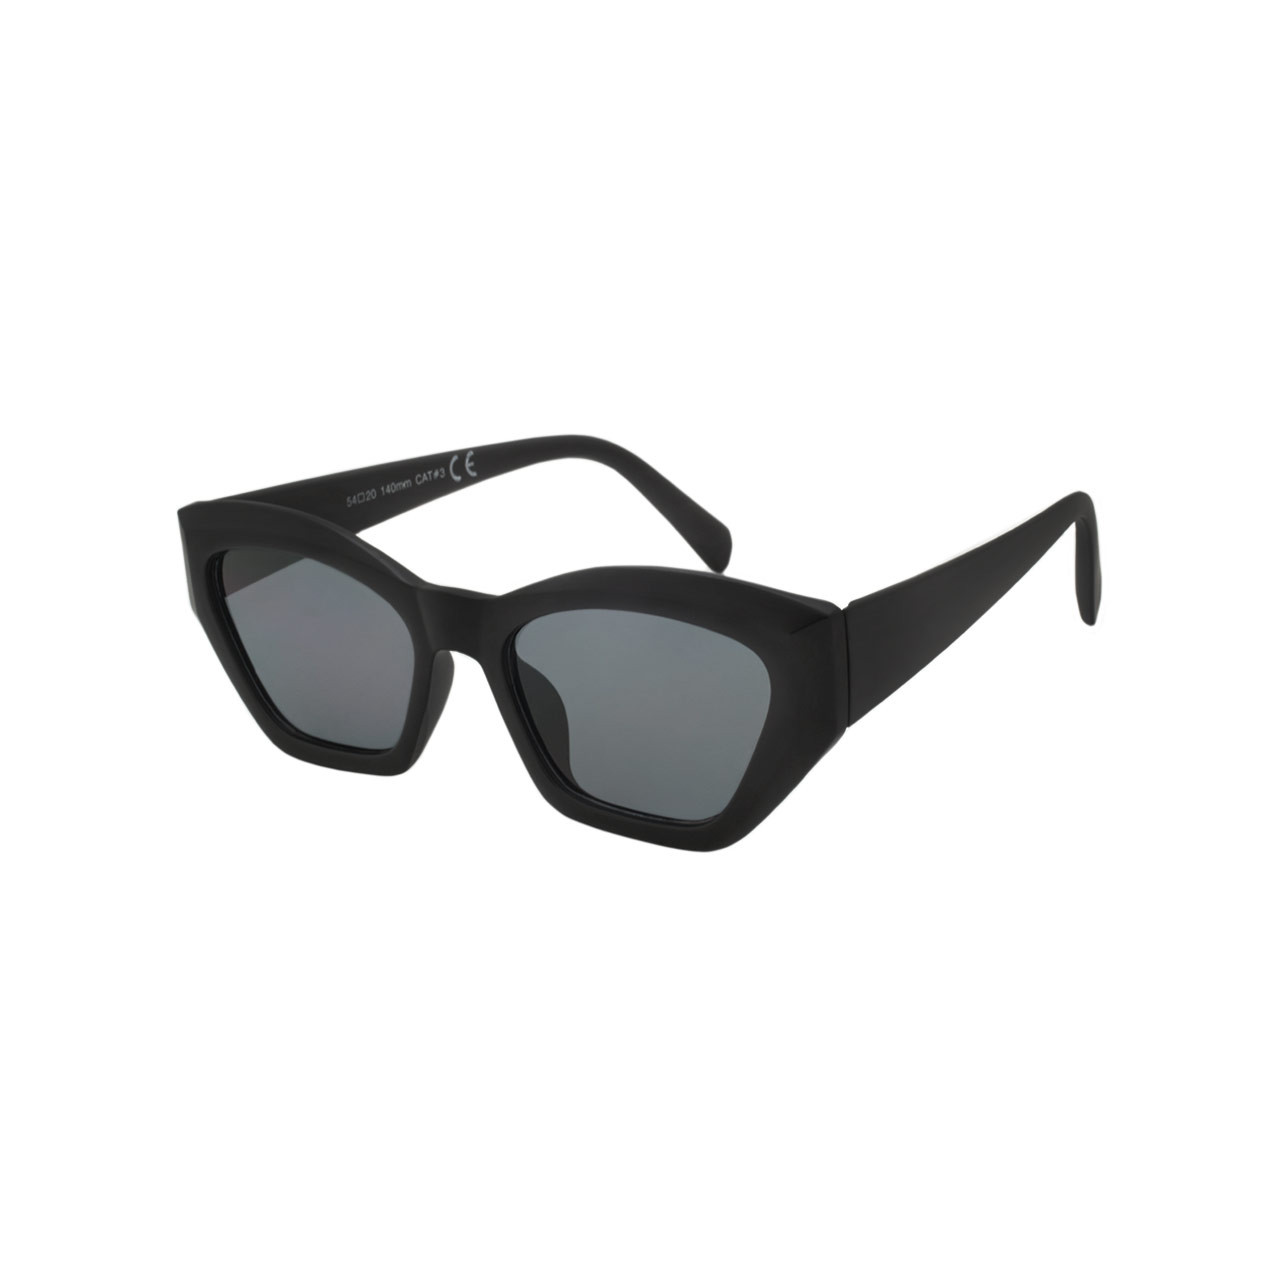  SITO SHADES Sensory Division Womens Cat Eye Sunglasses in Black  Safari/Standard Smoke Gradient